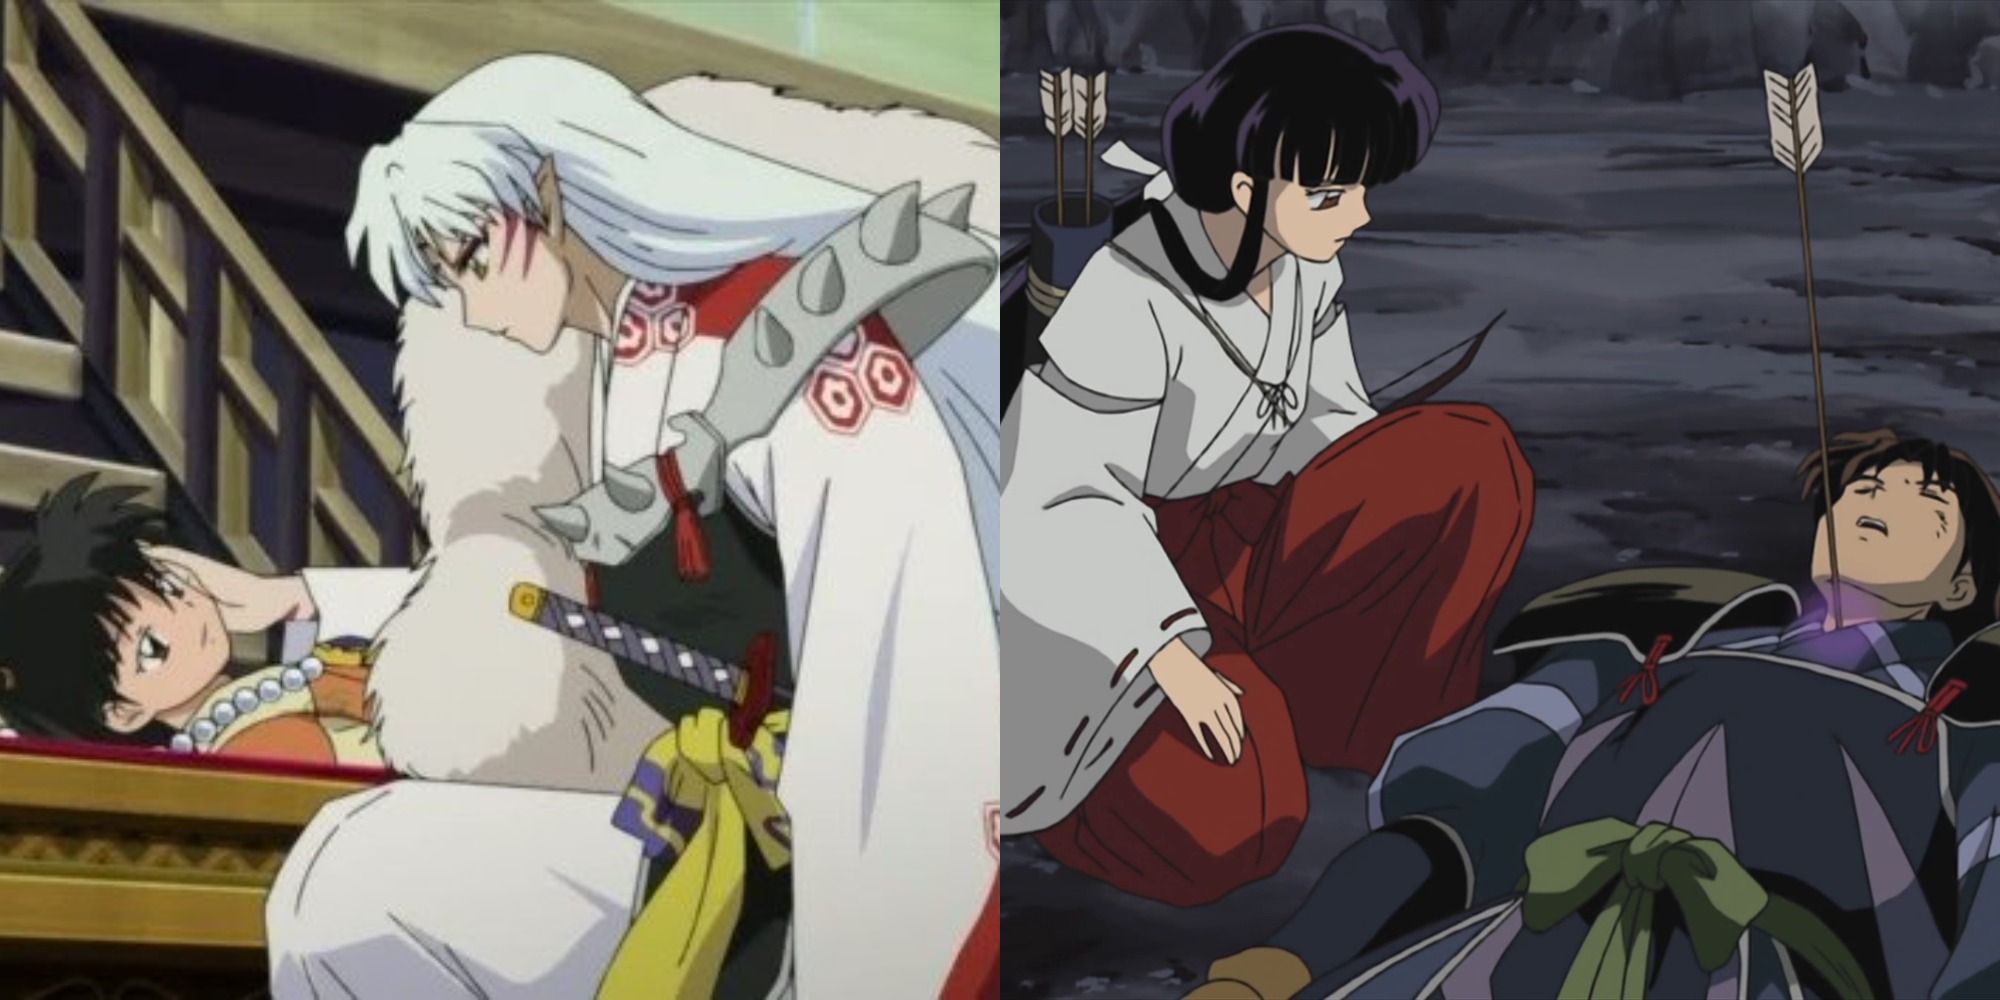 Split image showing Ssshomaru with Rin, and Kikyo with Suikotsu in InuYasha